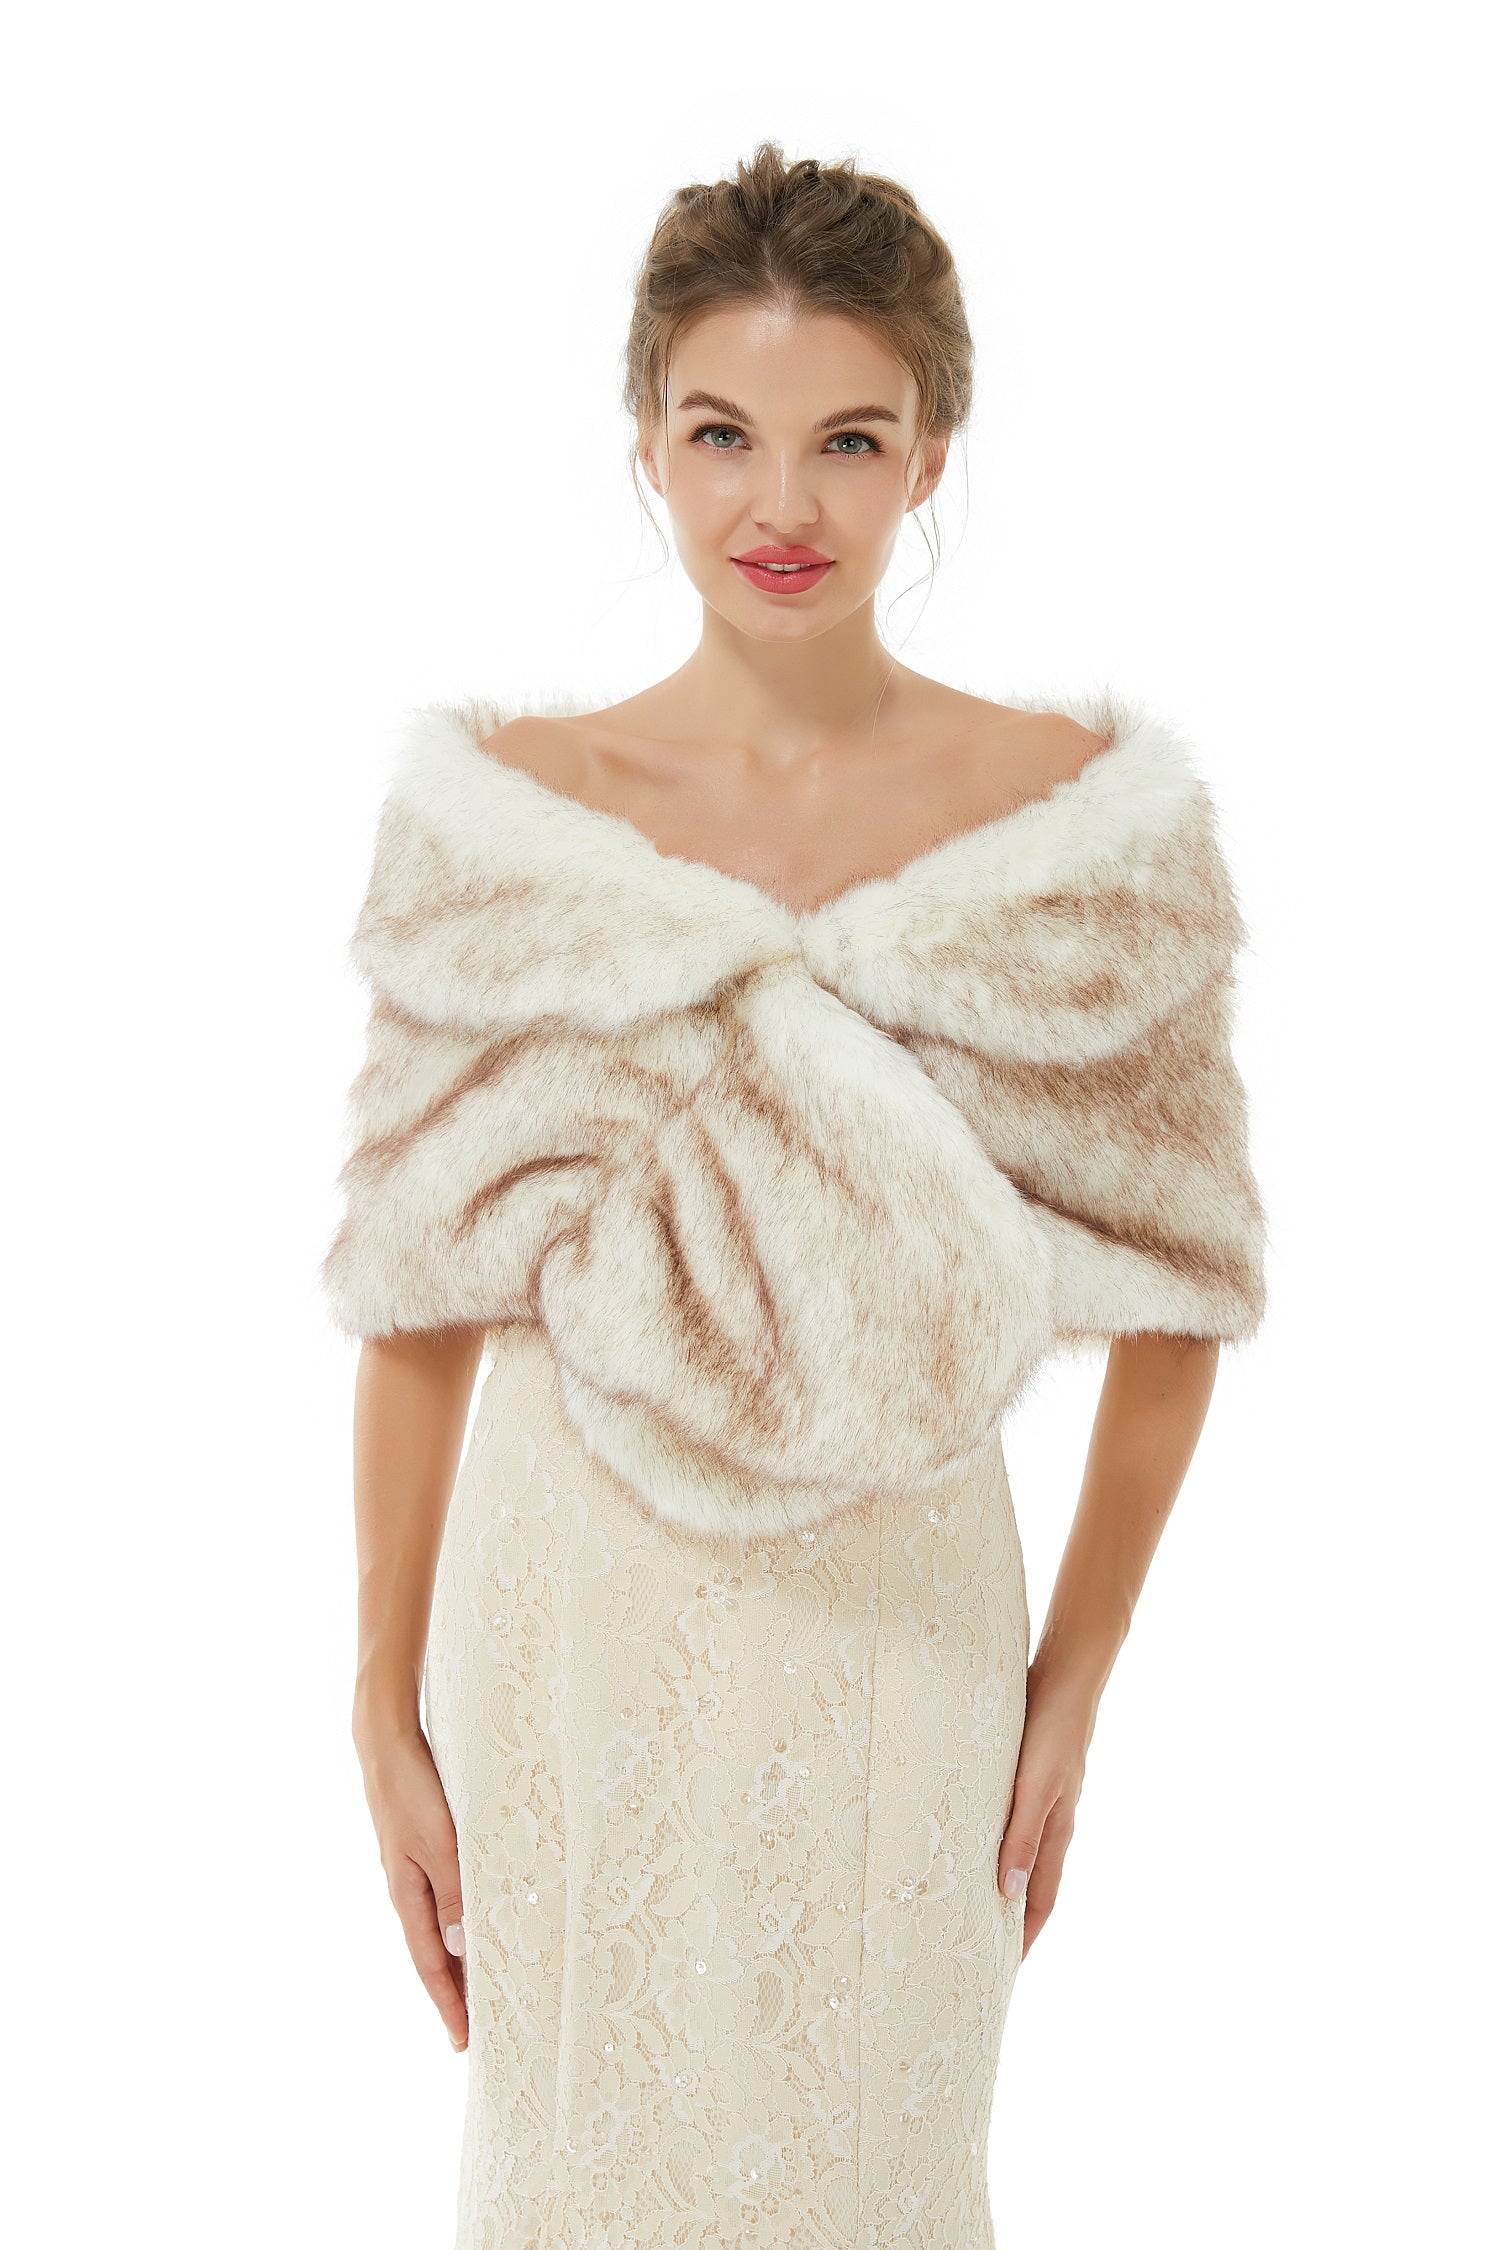 Dresseswow Faux Fur Wrap Women Shawl for Weddings